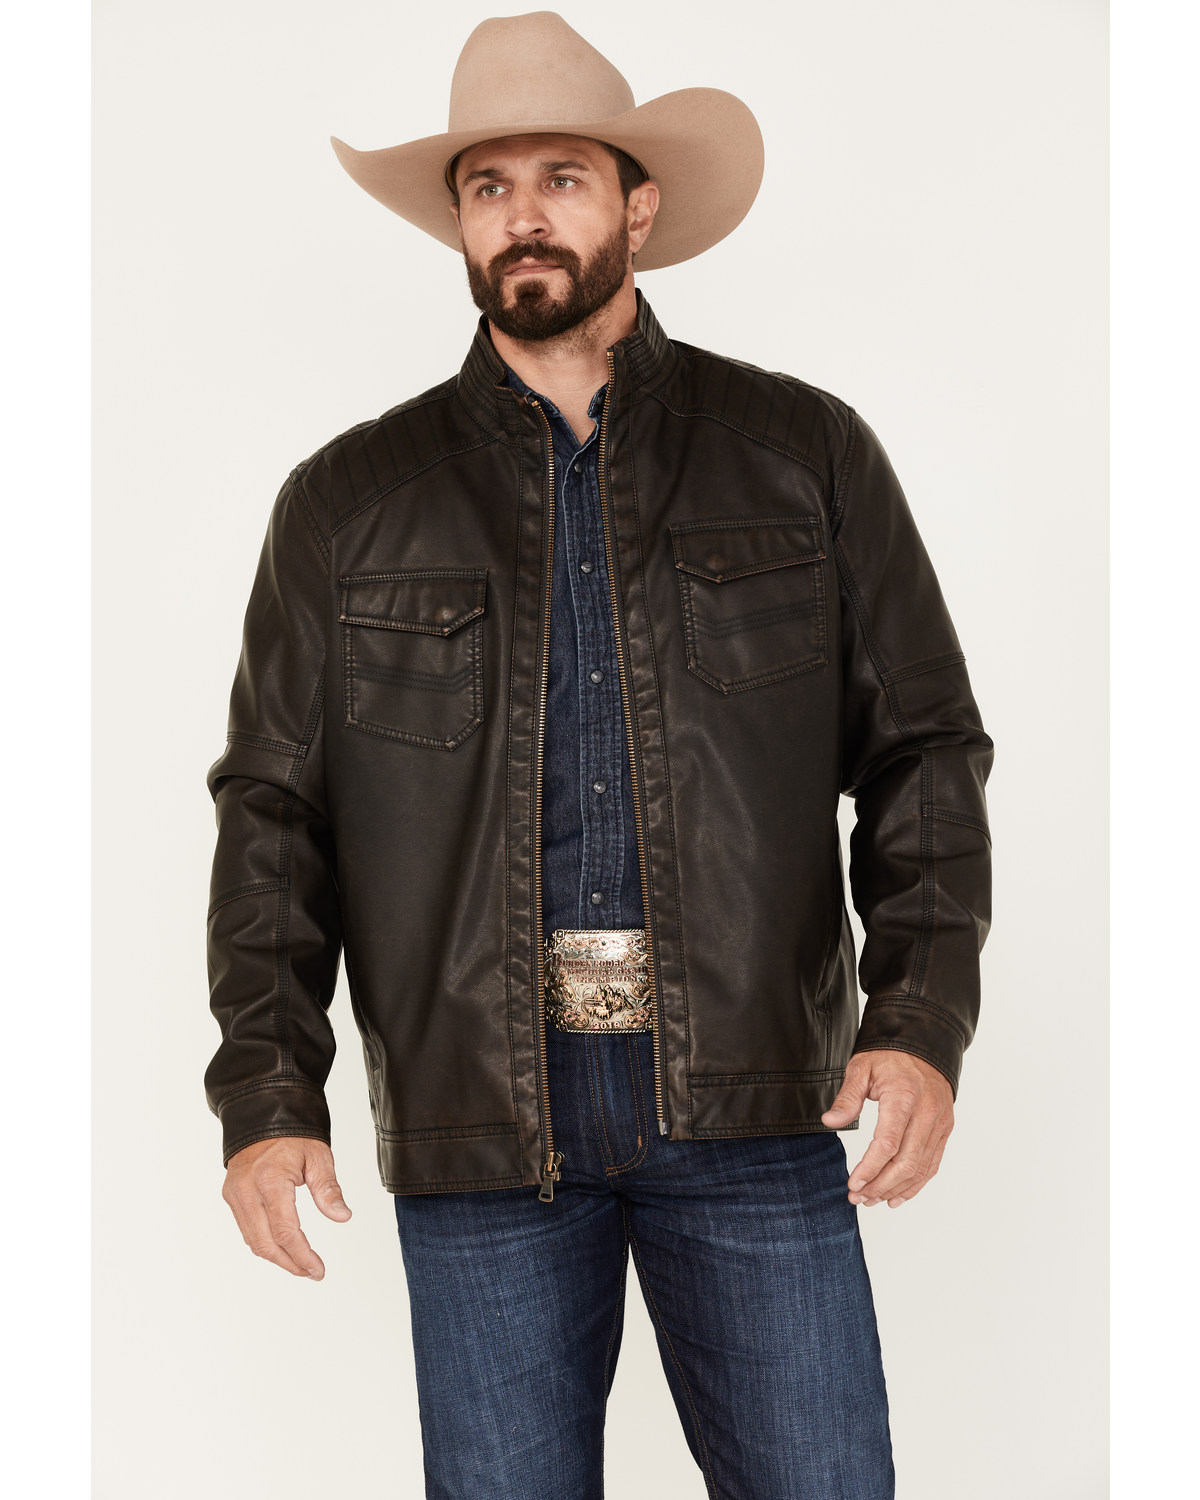 Cody James Men's Houston Distressed Moto Jacket - Big & Tall